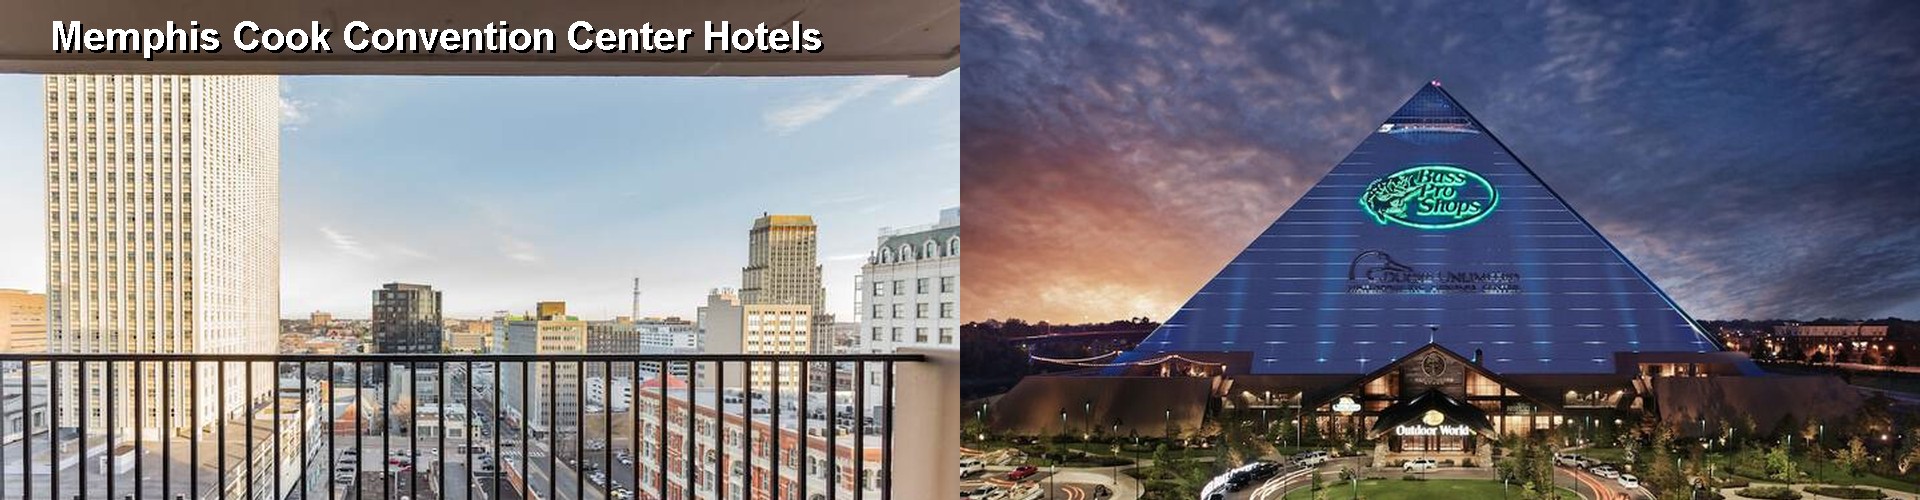 5 Best Hotels near Memphis Cook Convention Center